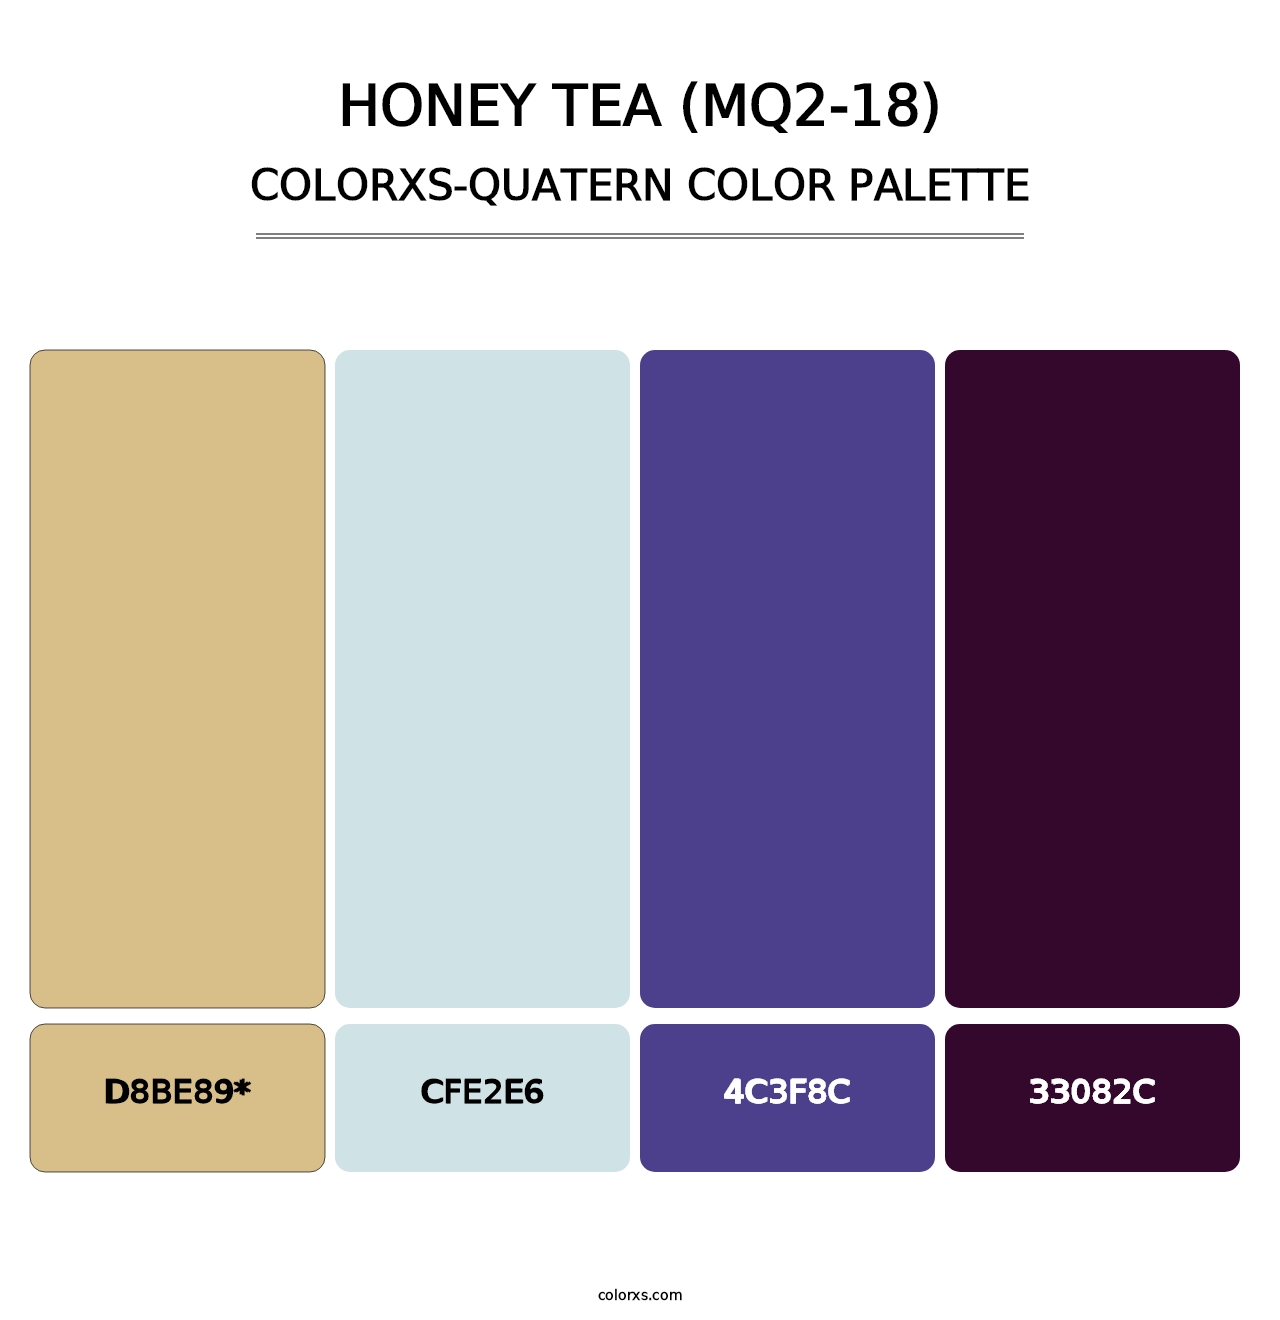 Honey Tea (MQ2-18) - Colorxs Quatern Palette